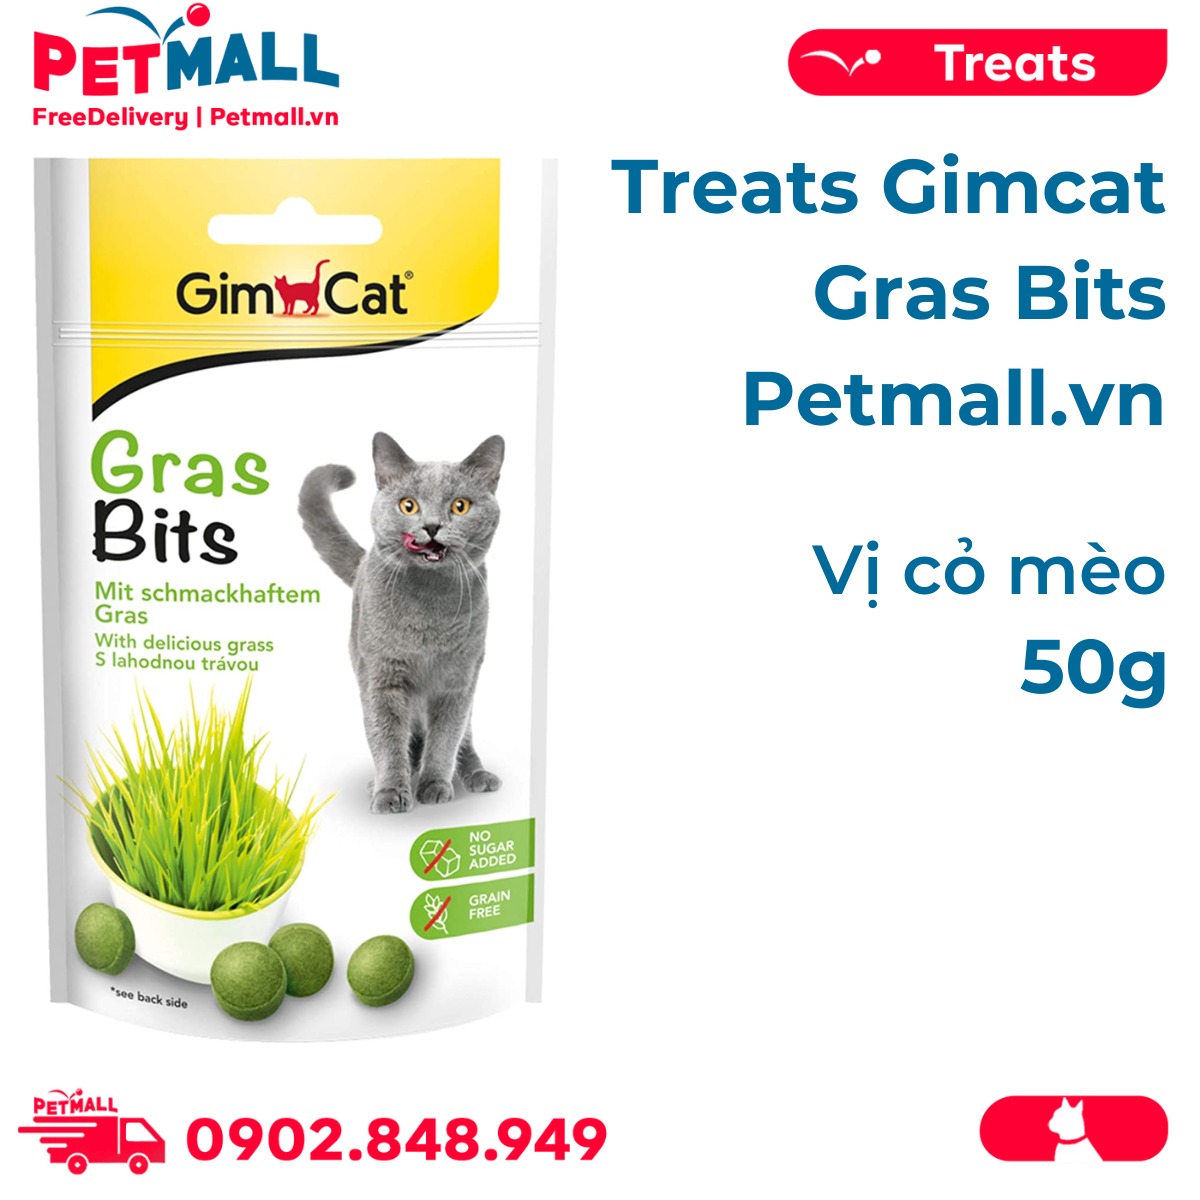 Treats Gimcat Gras Bits 50g - Vị cỏ mèo Petmall